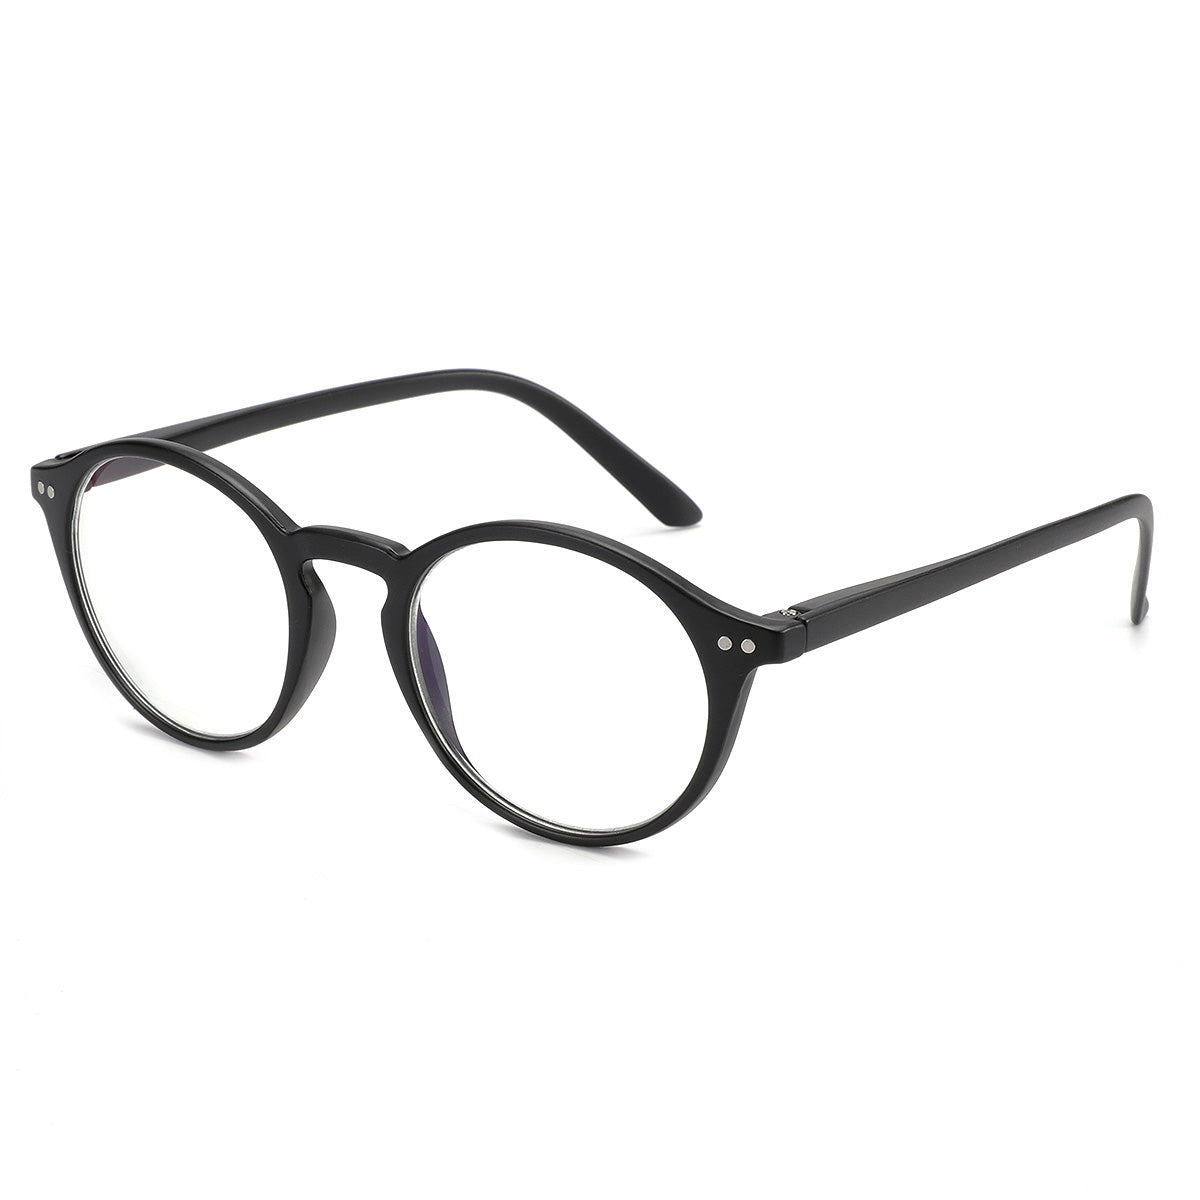 Sunglasses,specsmart, spec smart, glasses, eye glasses glasses frames, where to get glasses in lagos, eye treatment, wellness health care group, ACCESS GEORGE